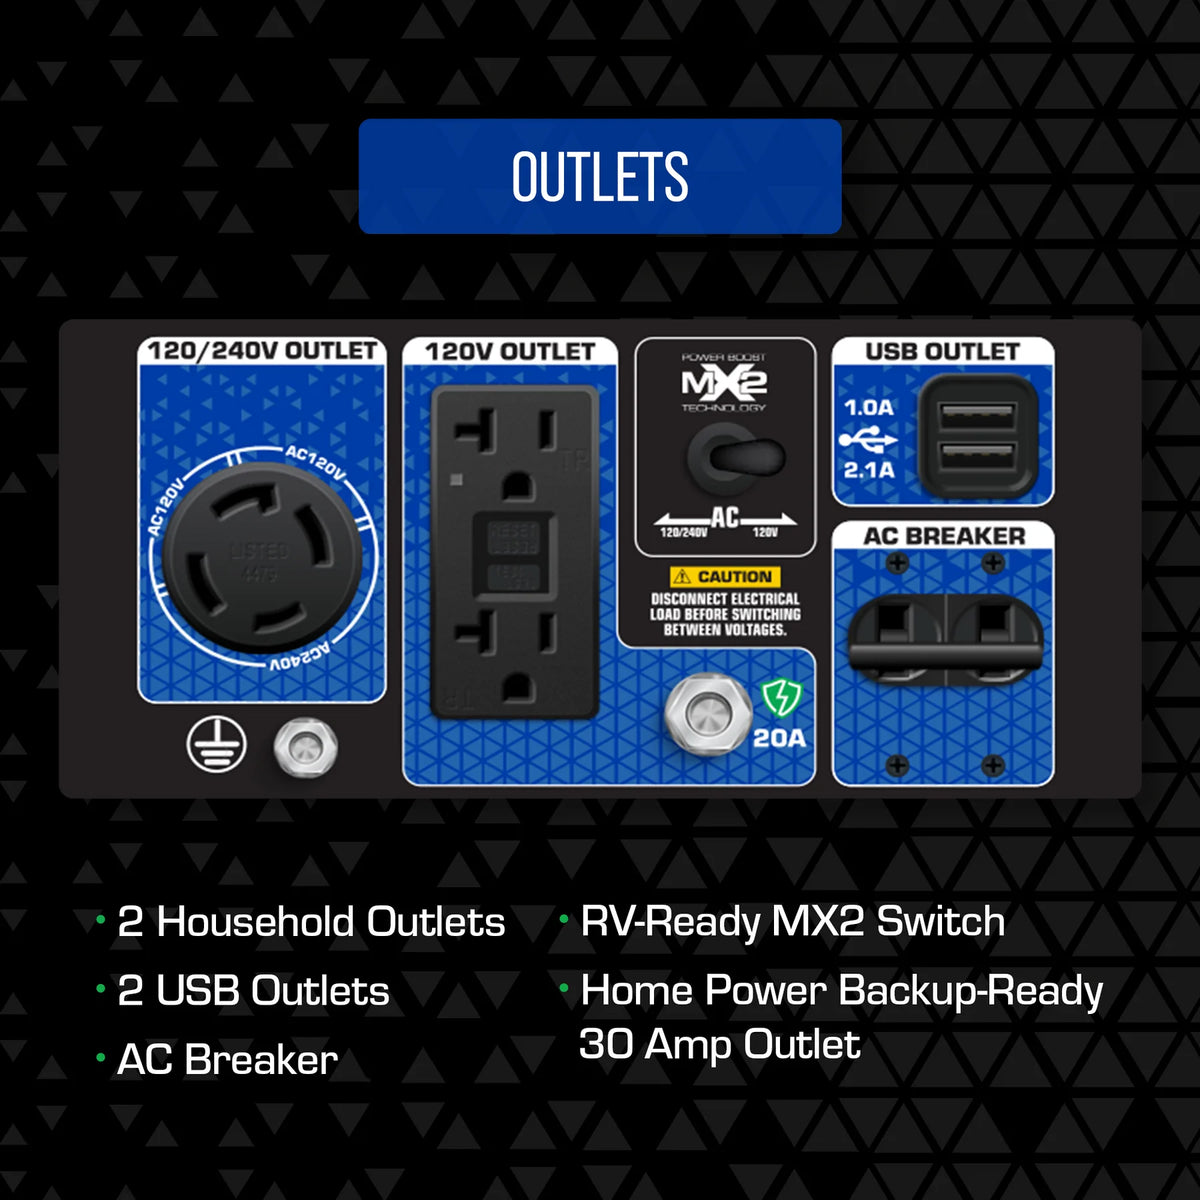 DuroMax XP4850HX 4,850-Watt/3,850-Watt 210cc Electric Start Dual Fuel Portable Generator with CO Alert